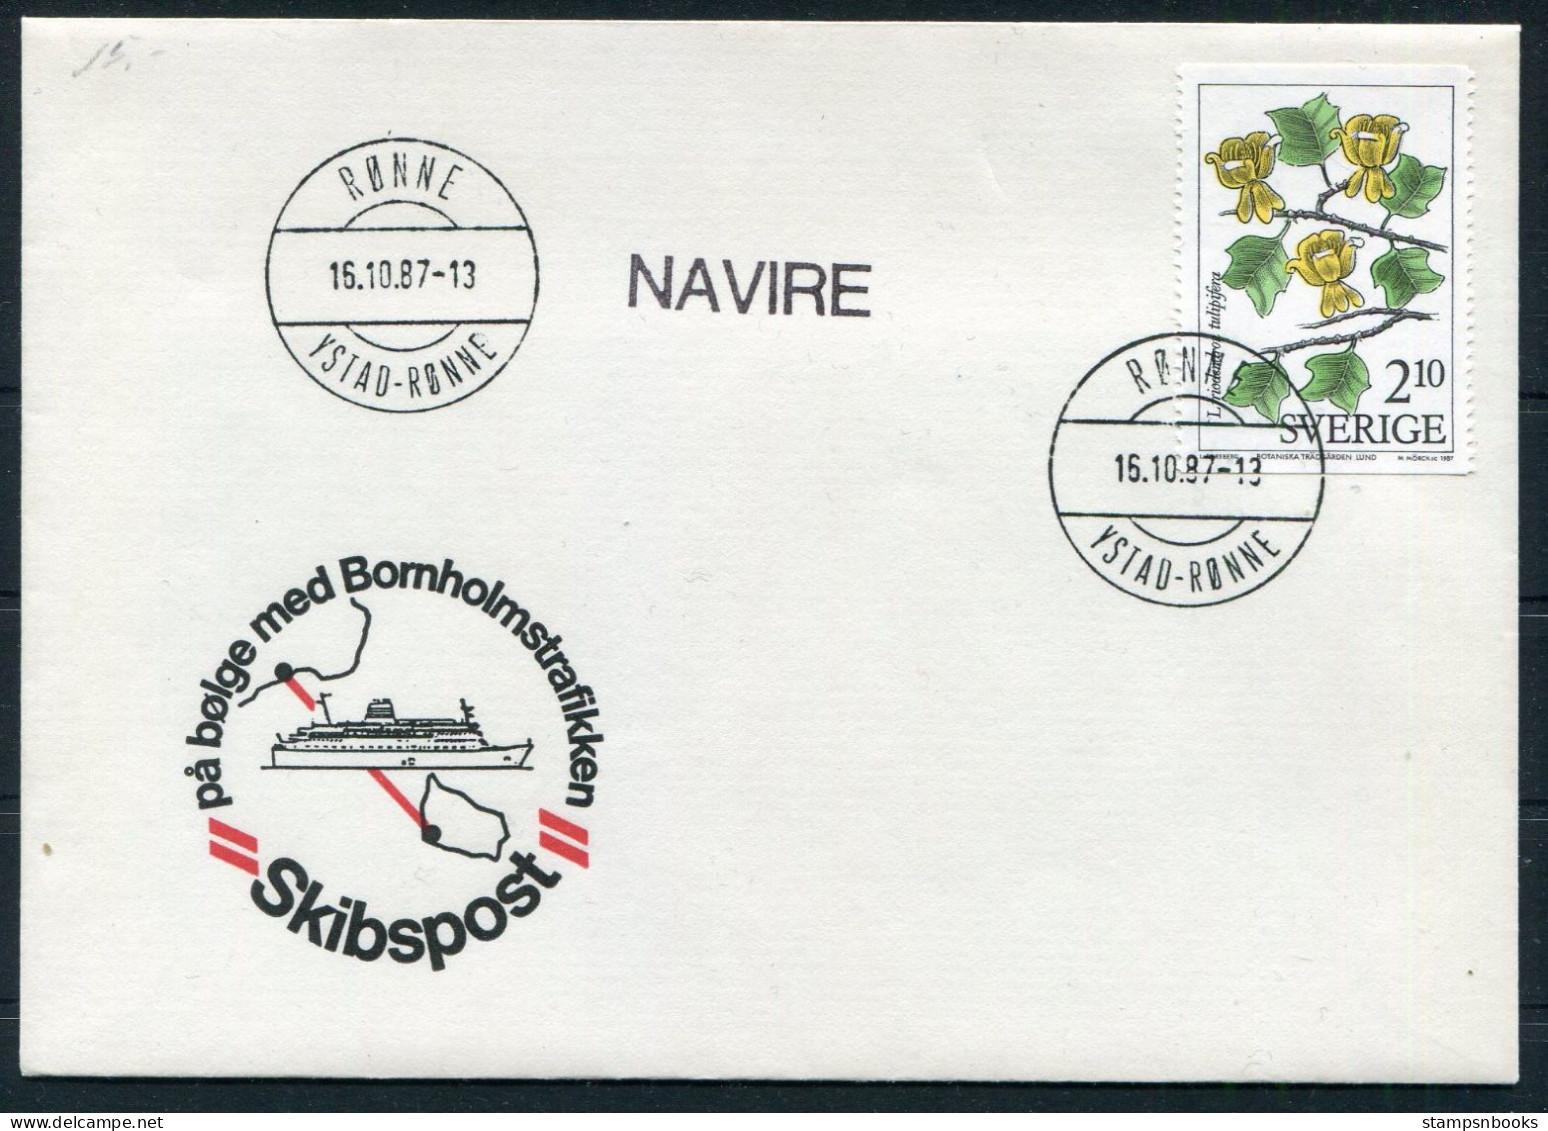 1987 Sweden Denmark Bornholm Ystad - Ronne Ship NAVIRE Skibspost Cover - Lettres & Documents